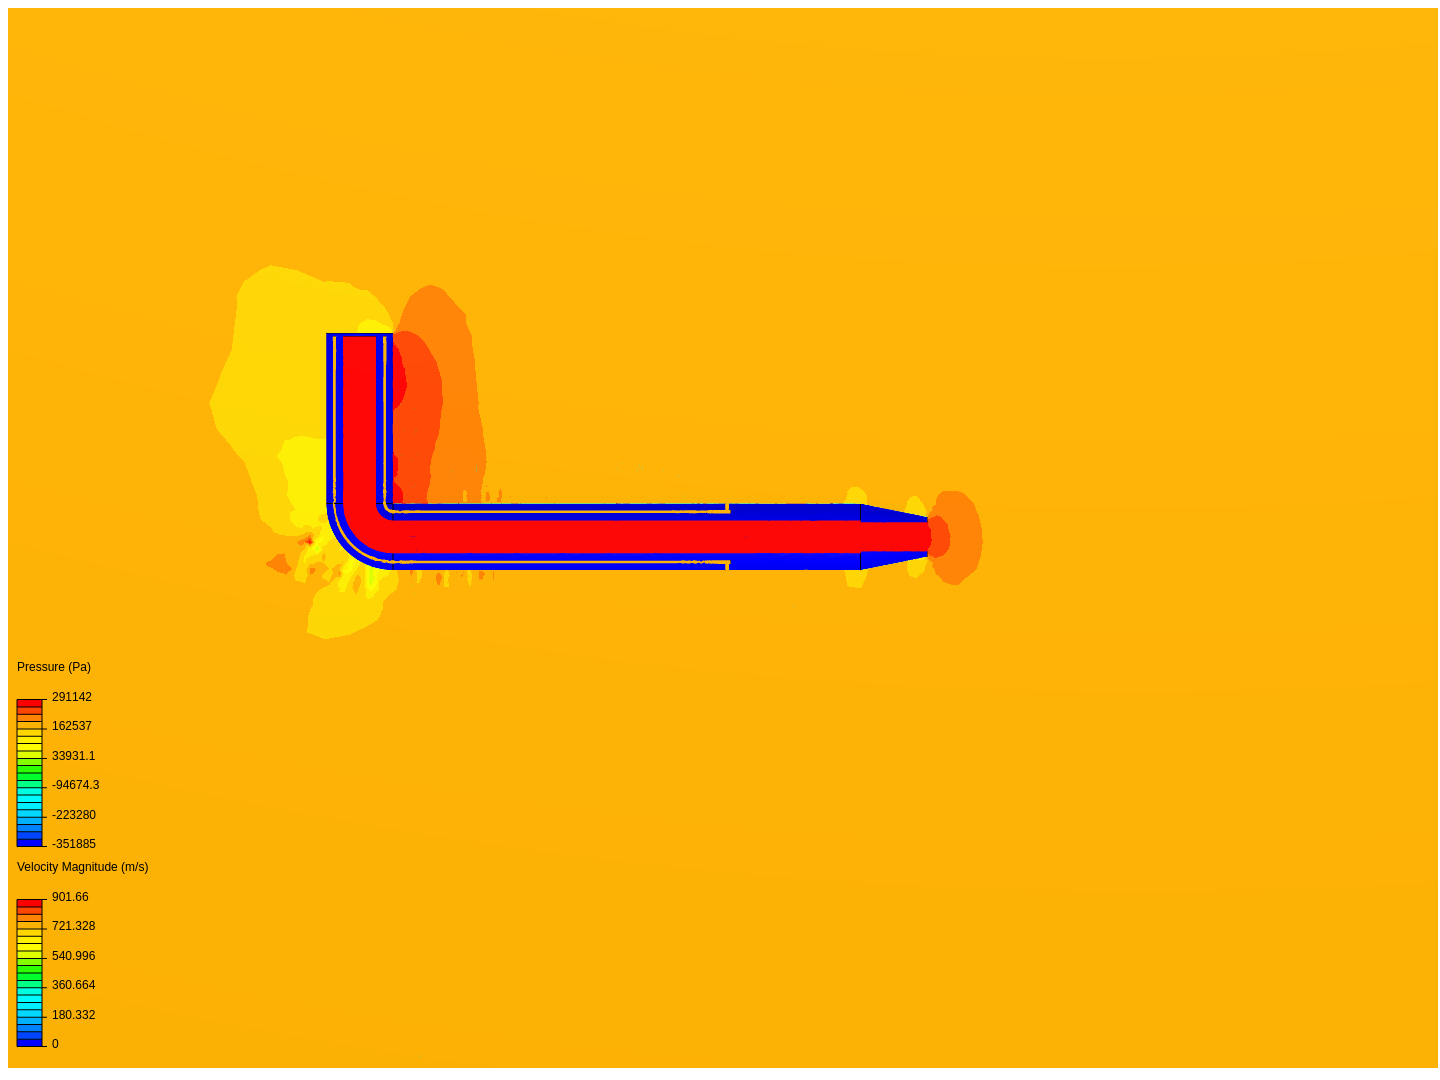 Pitot Tube, Ellipsoid Nose, 20 percent and 1 cm depth Blockage image